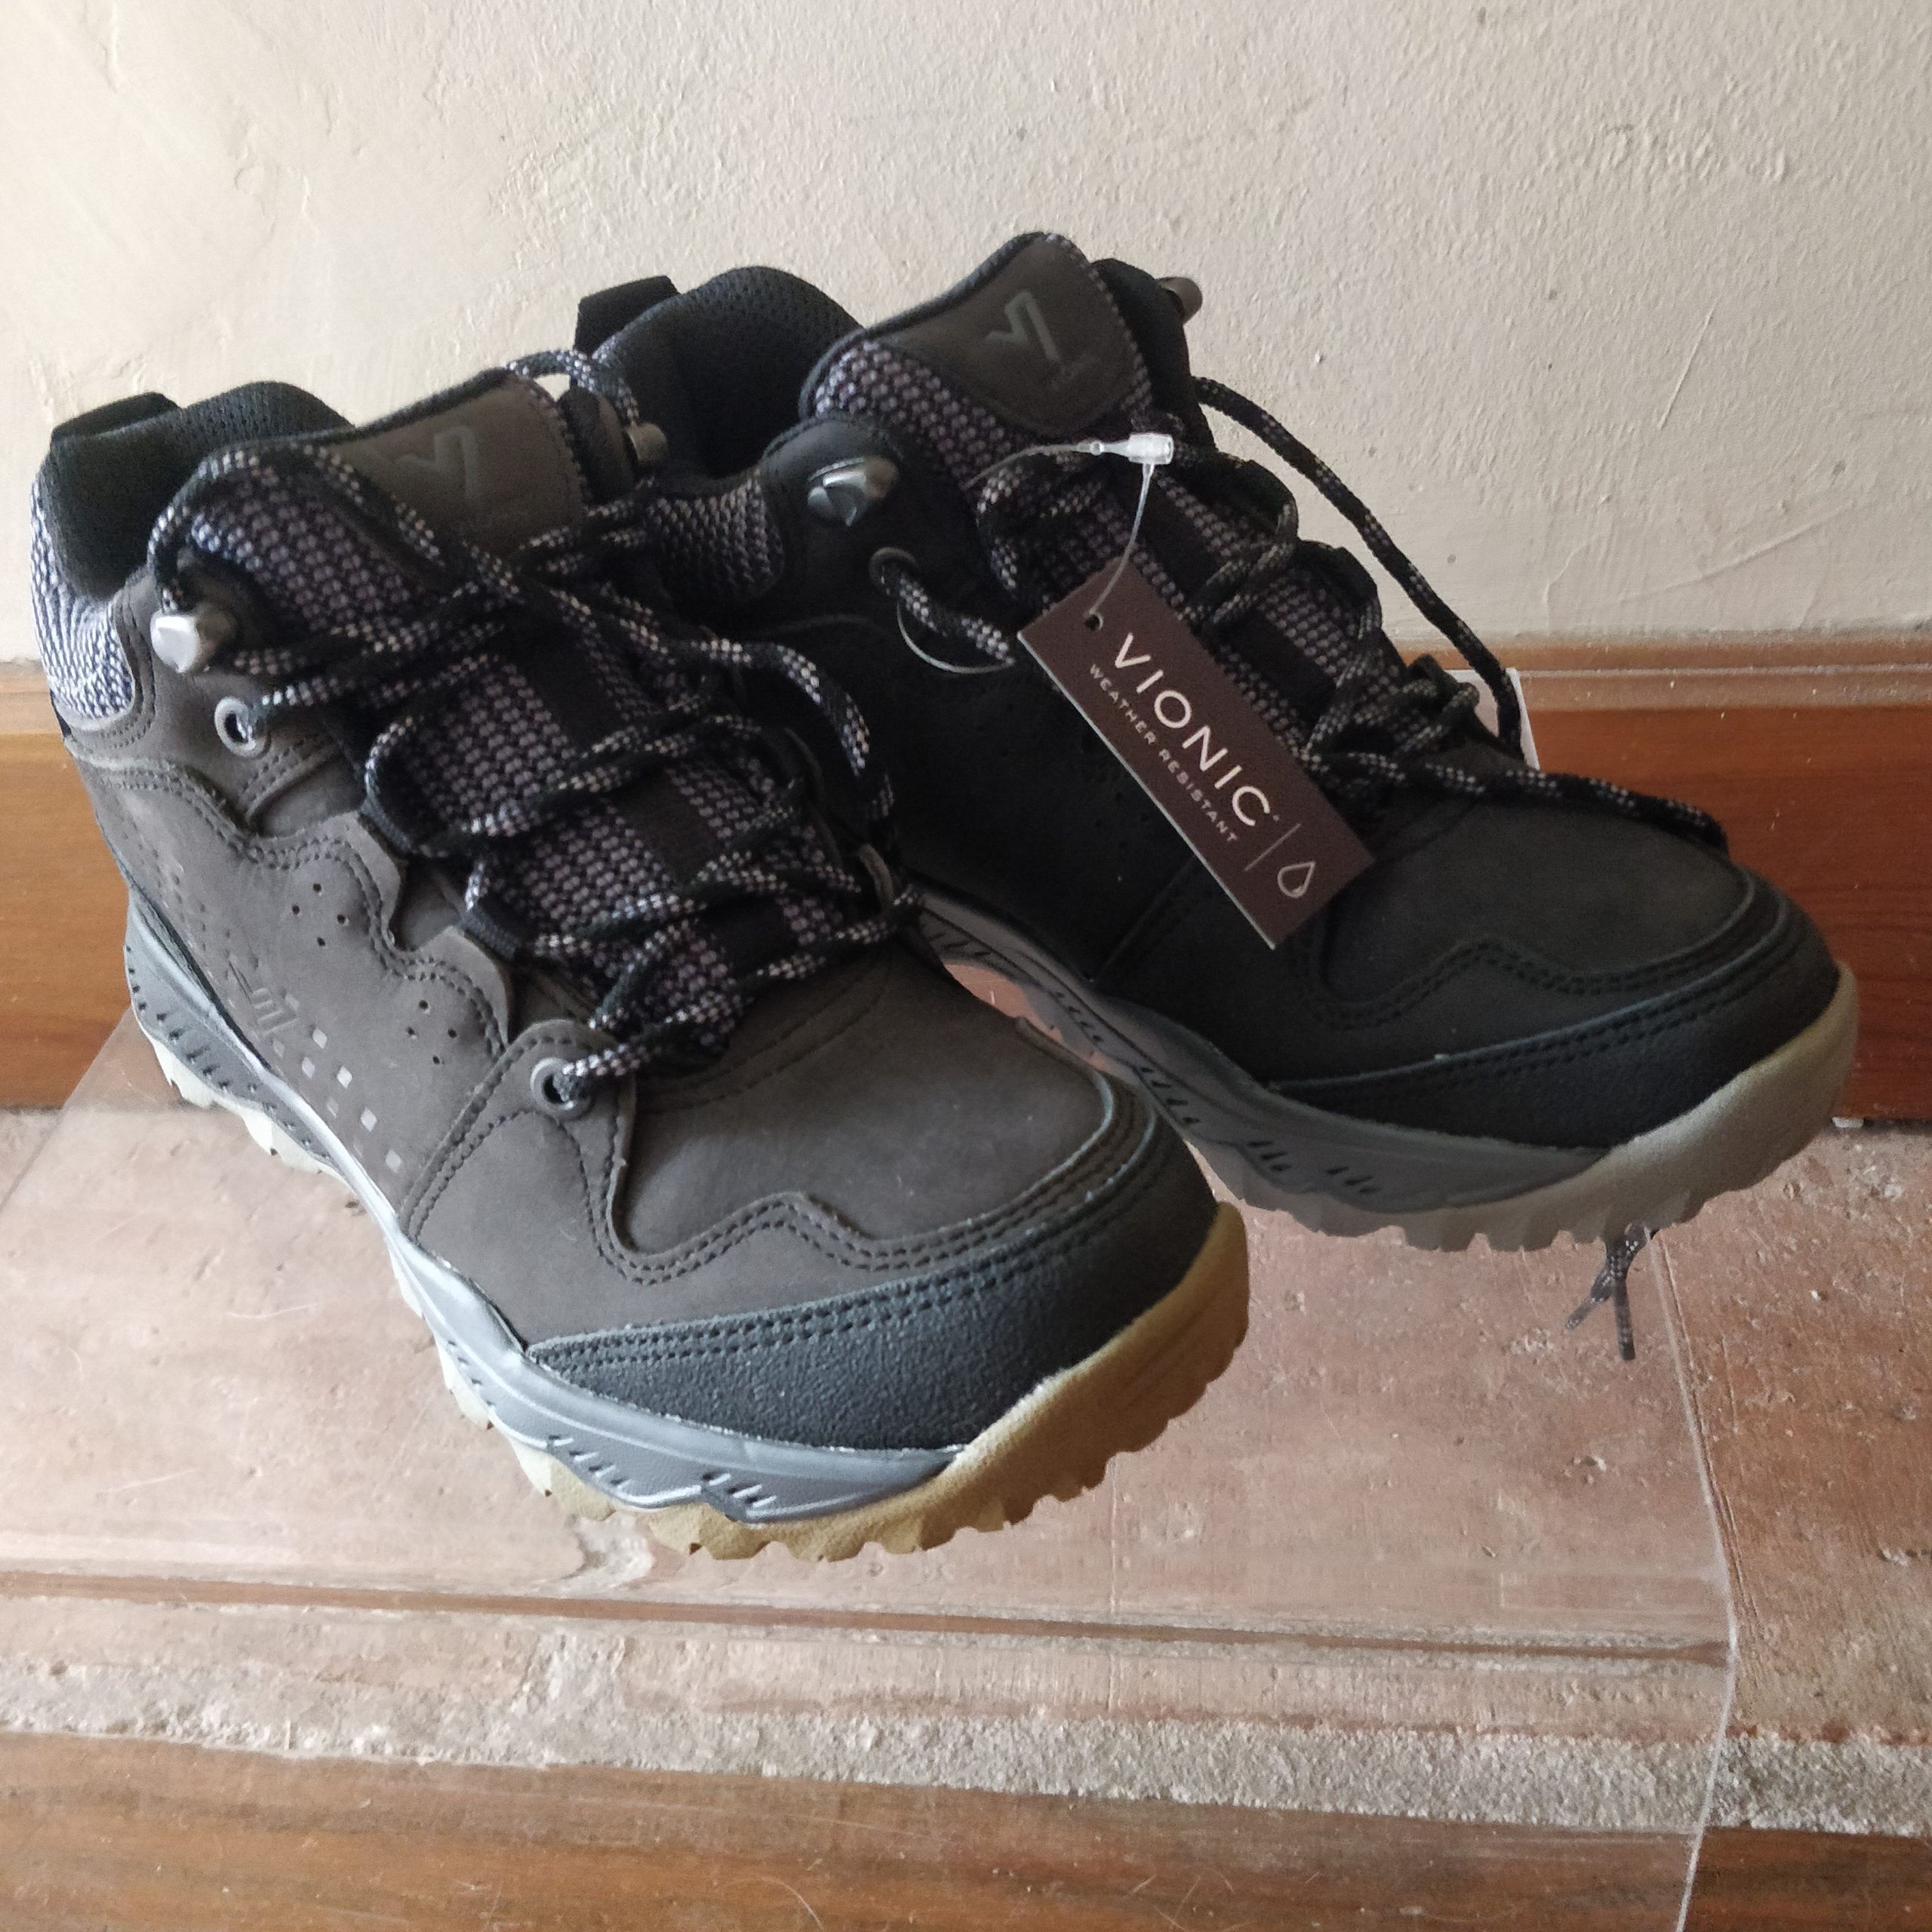 Vionic Everett hiking boot in black